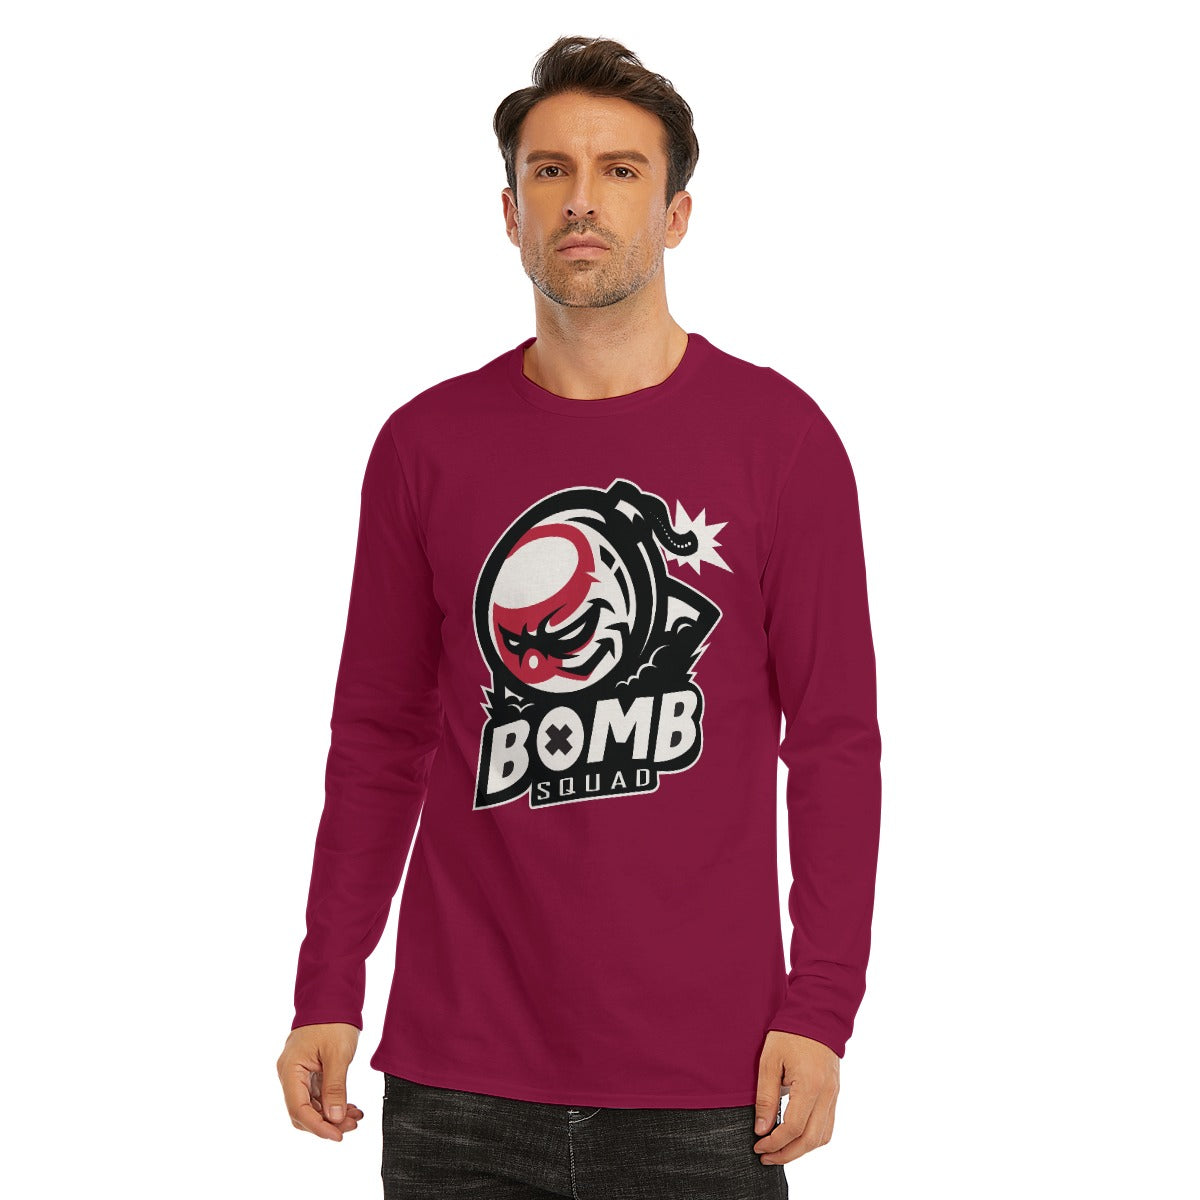 Bomb Squad T-shirt Long Sleeve